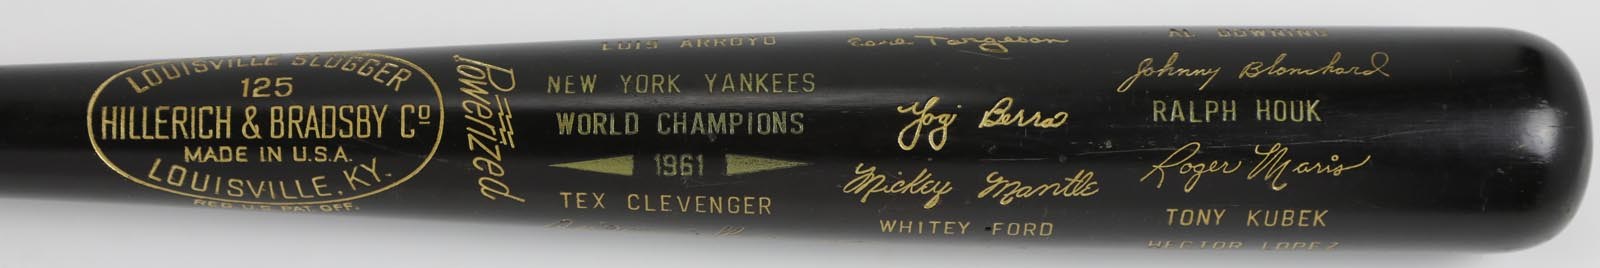 1961 New York Yankees World Champions Commemorative Bat